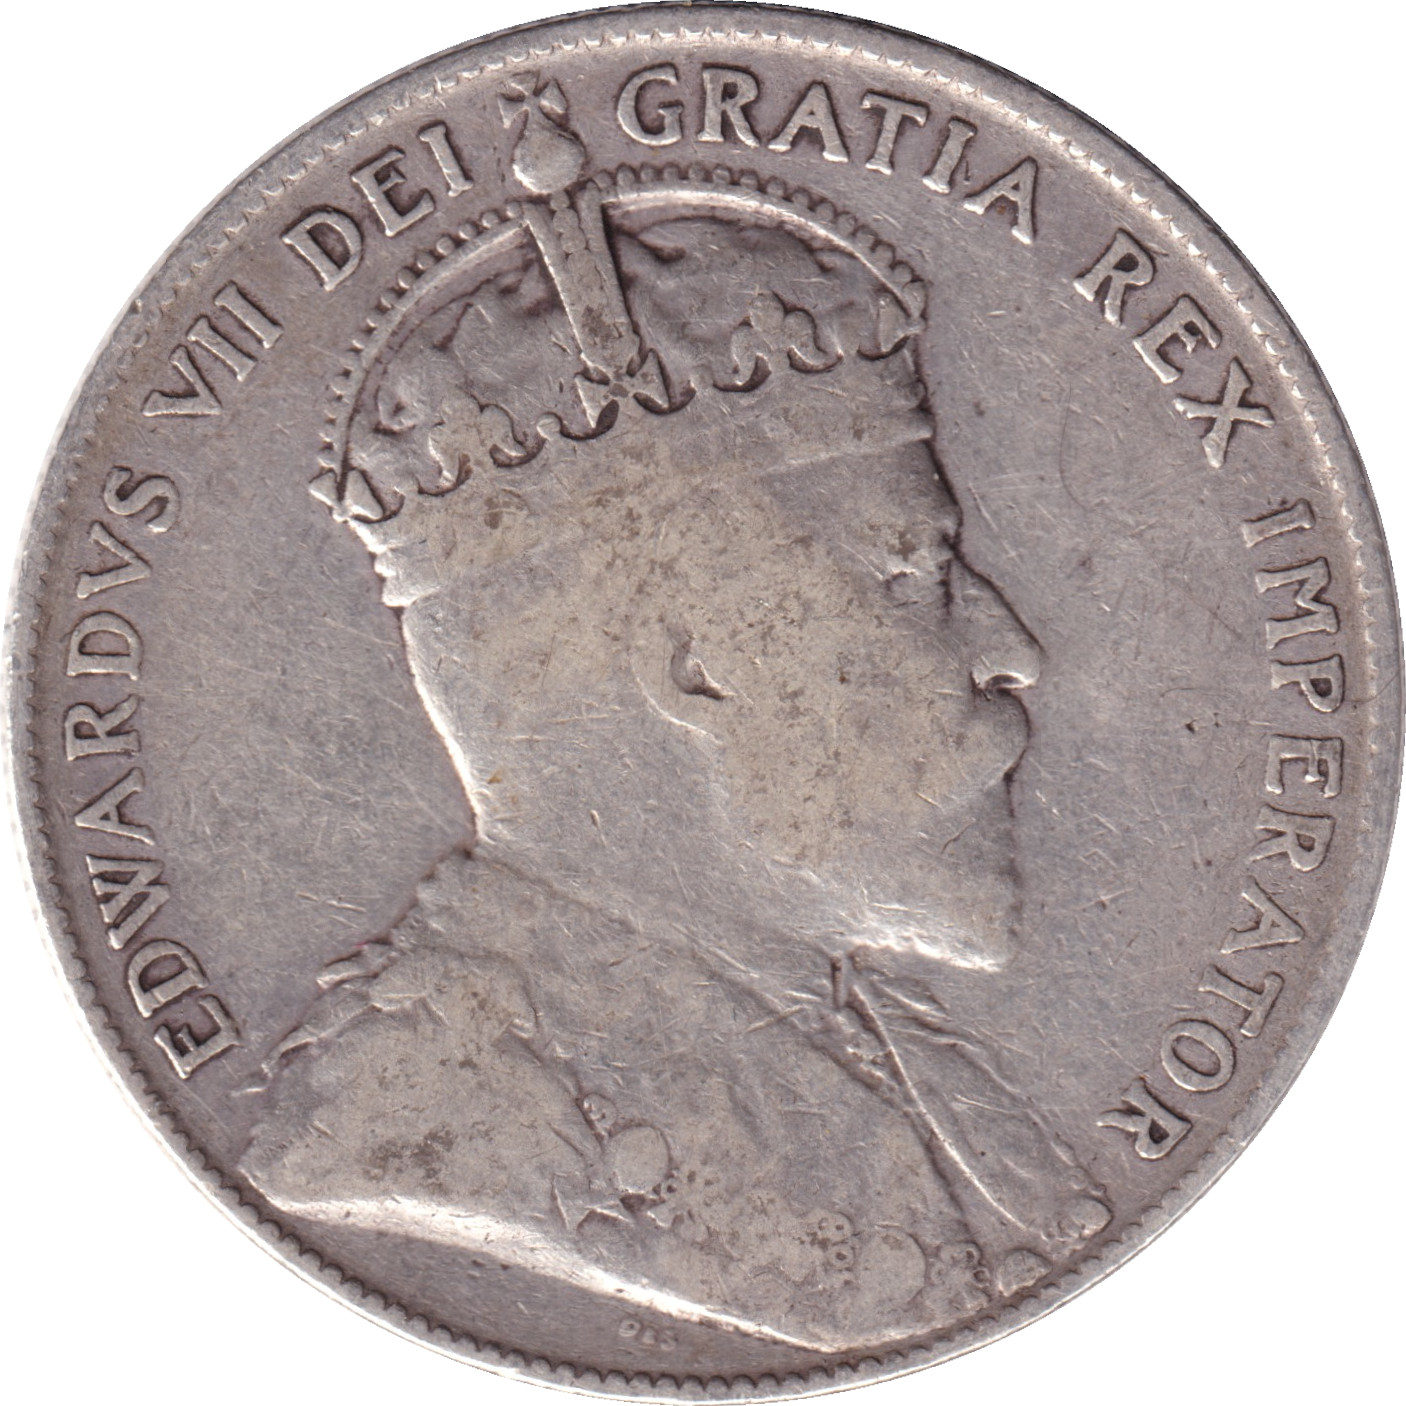 50 cents - Edward VII